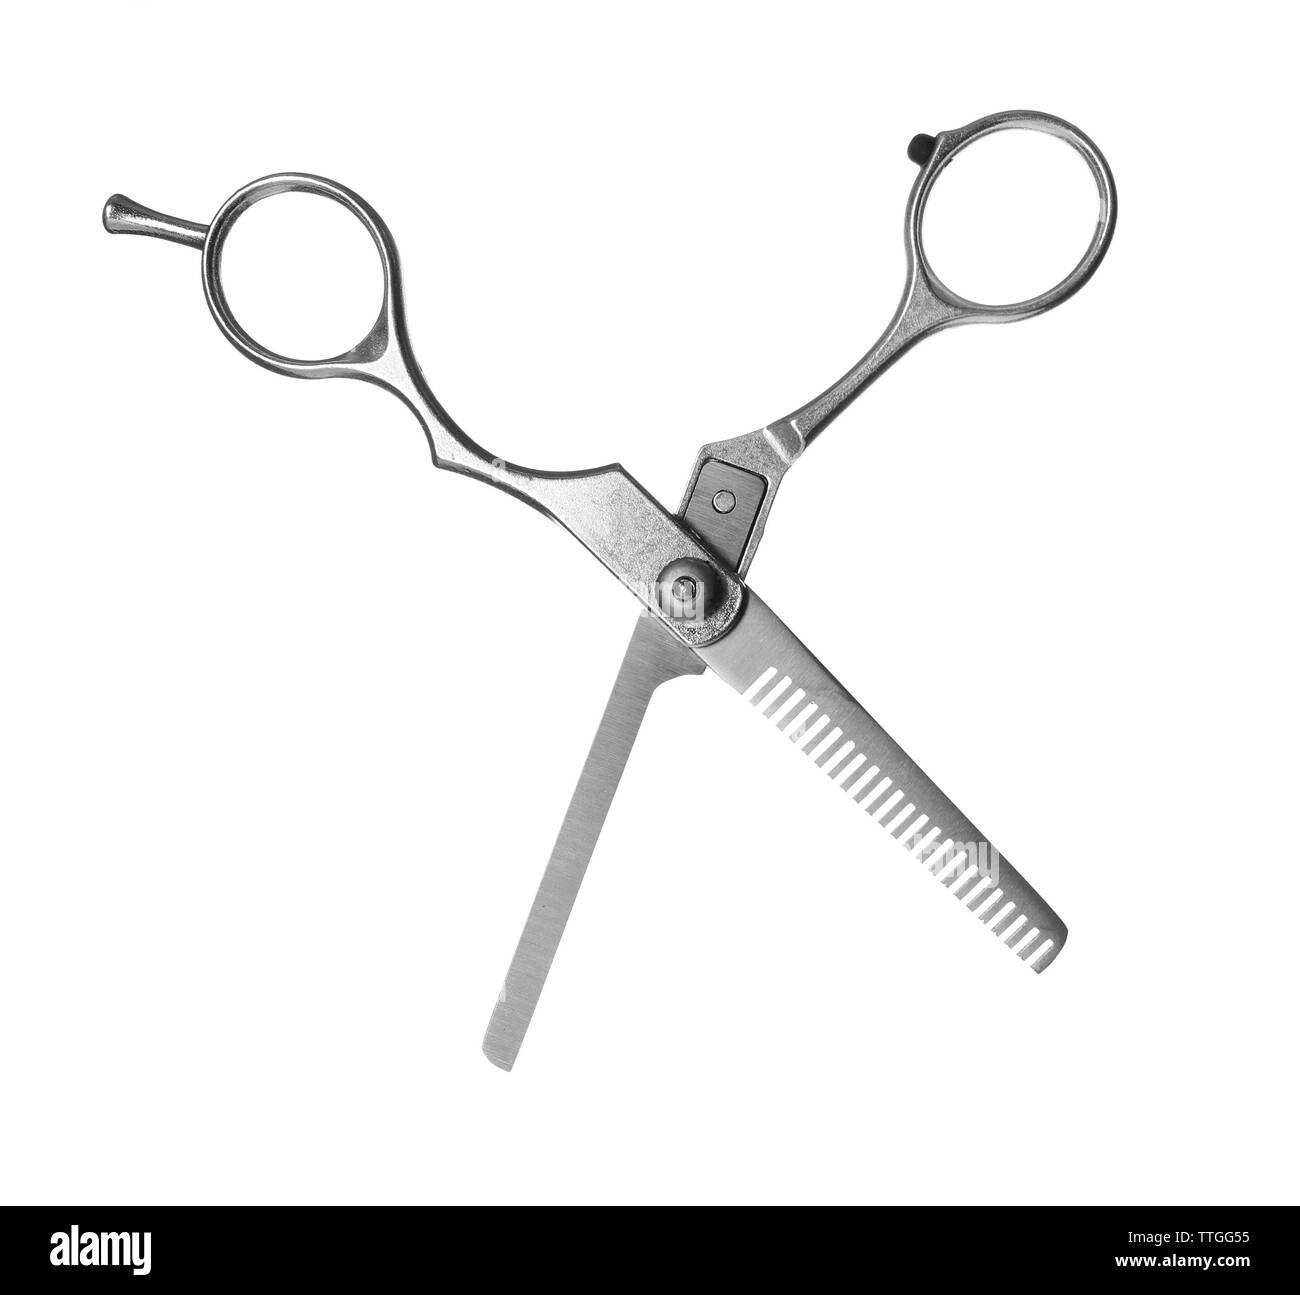 Stylized vector of hairdresser scissors in open position